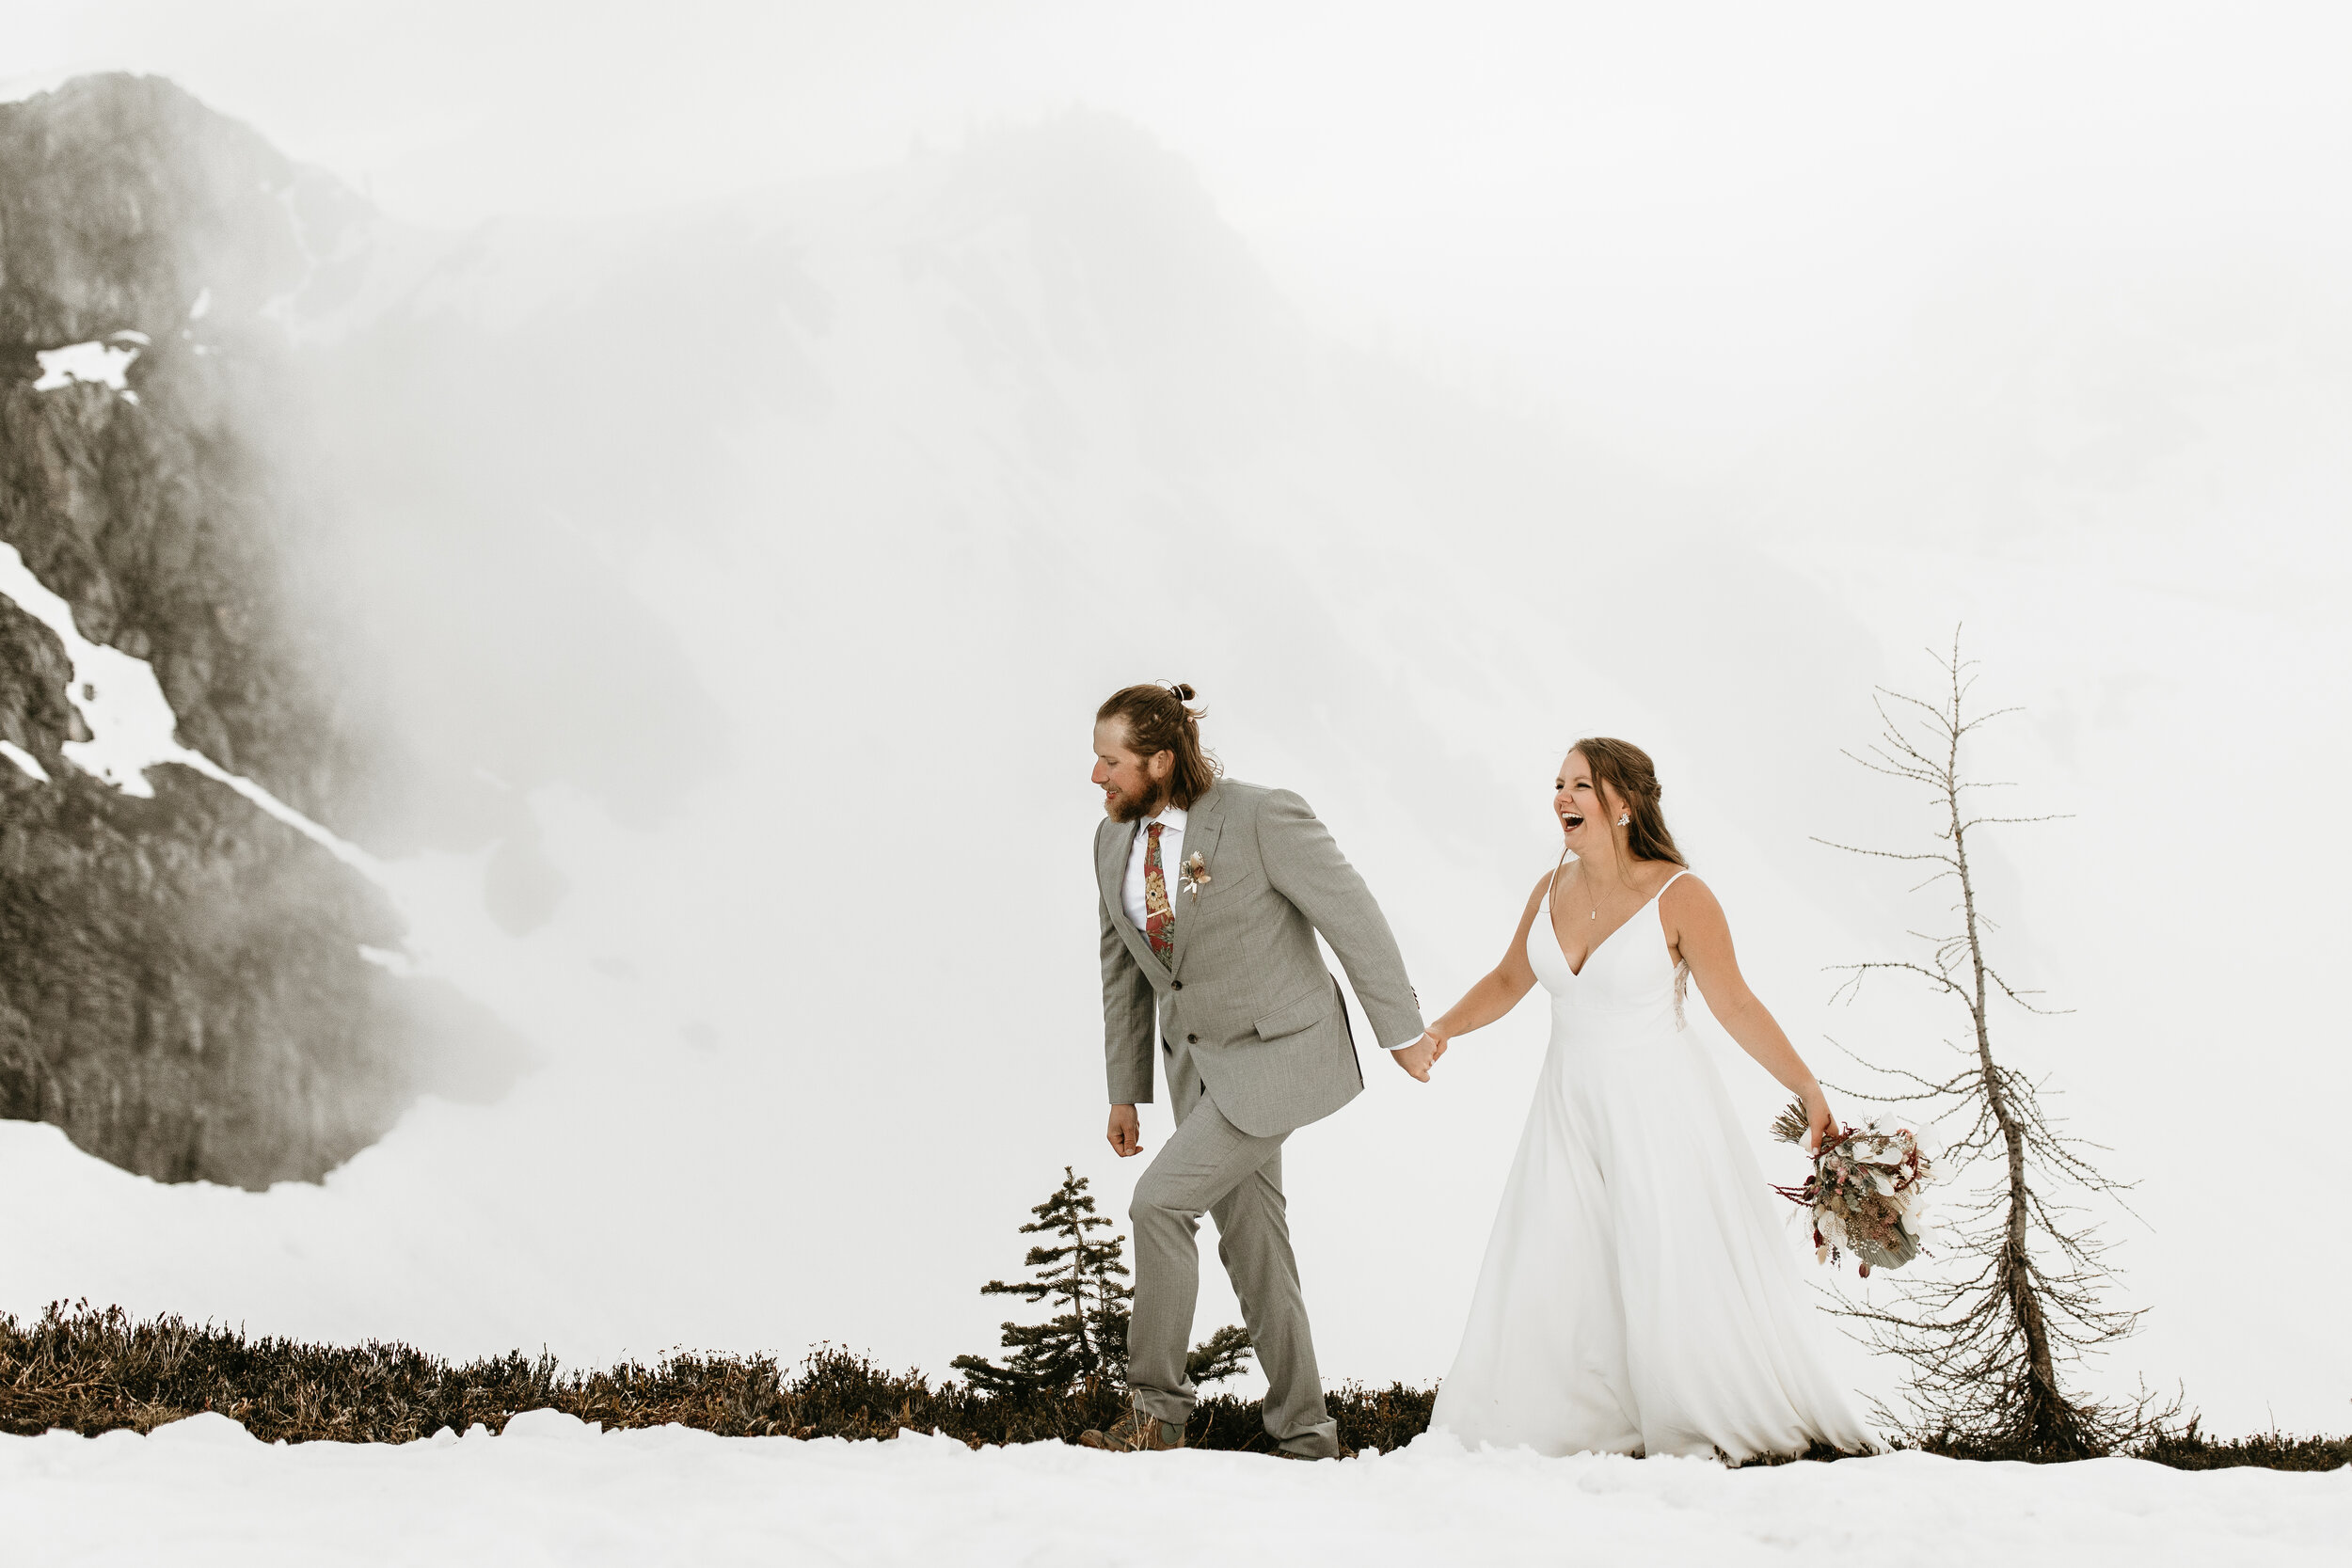 Nicole-Daacke-Photography-elopement-snow-storm.jpg